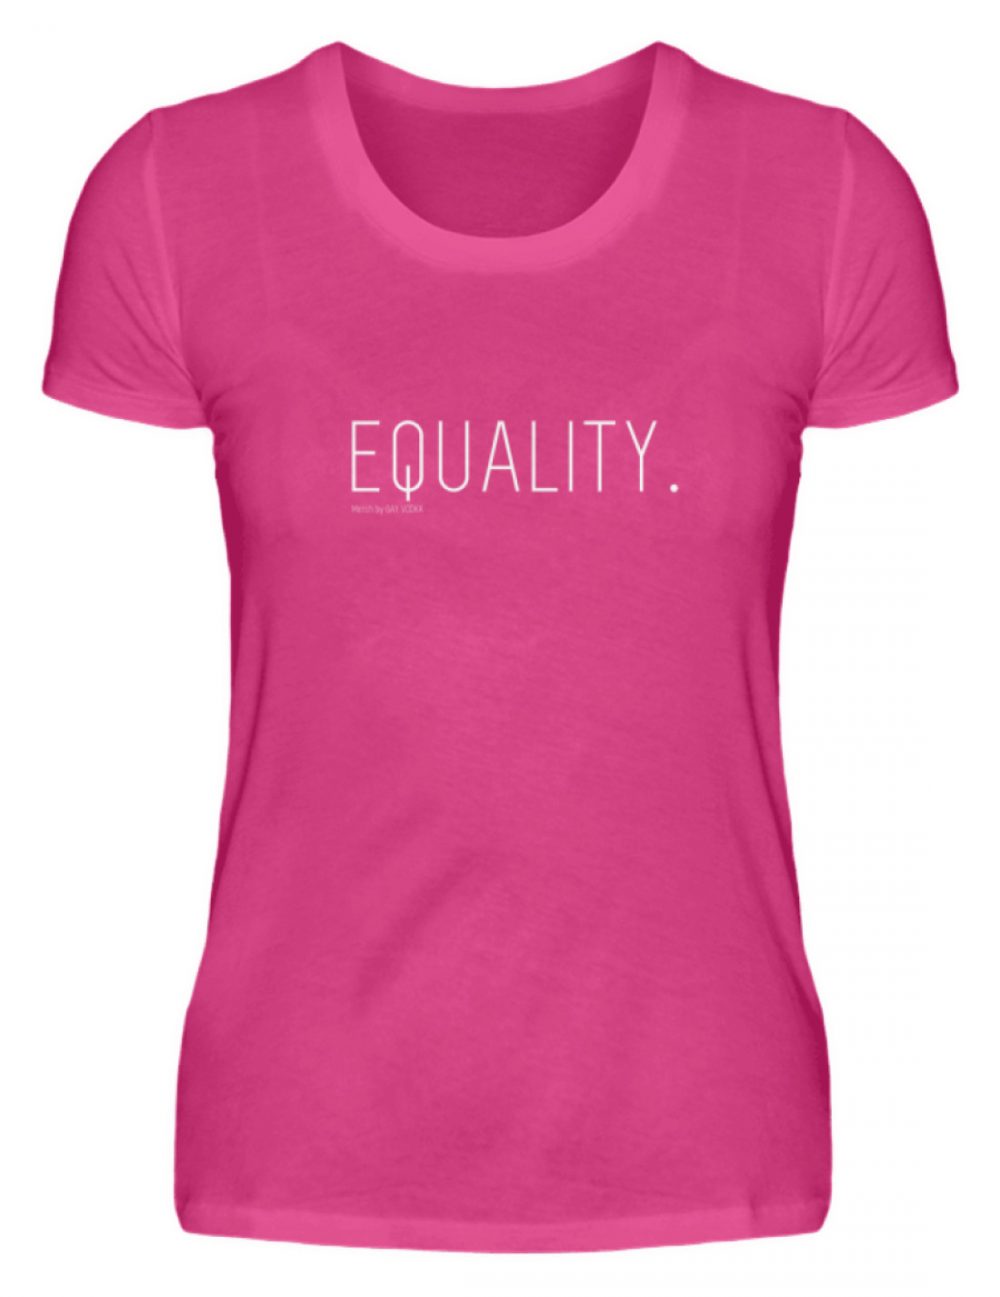 EQUALITY. - Damen Premiumshirt-28